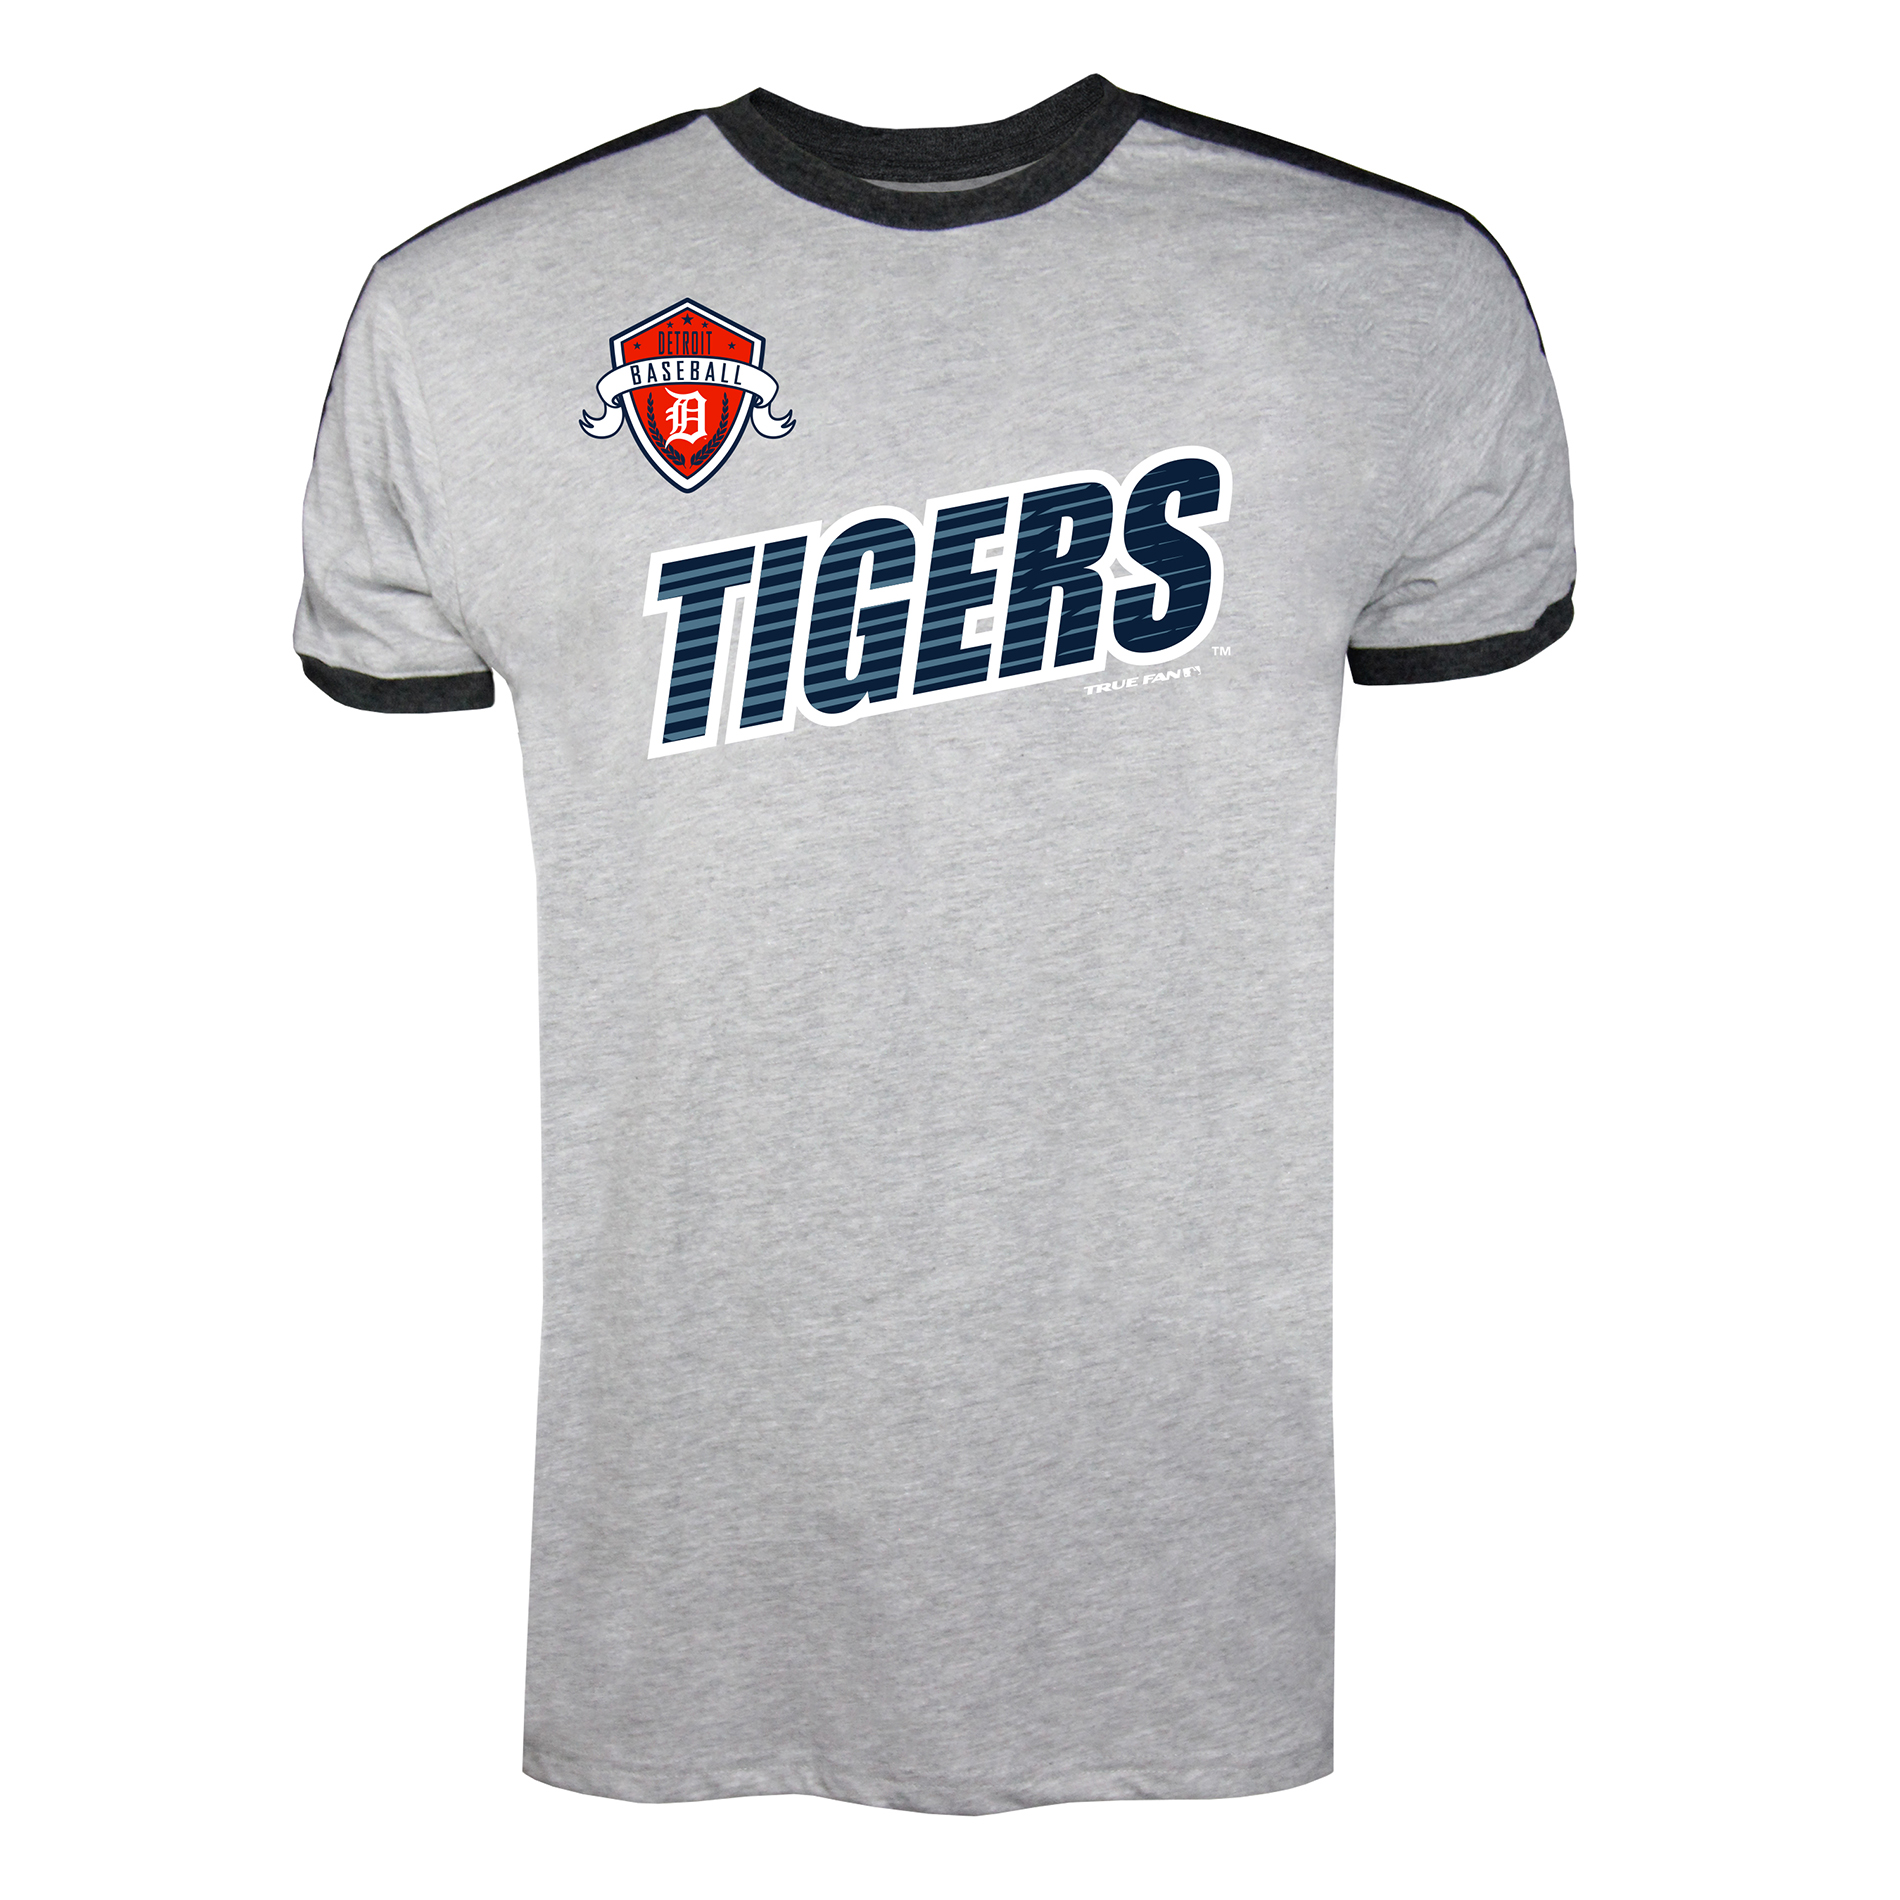 detroit tigers baseball shirt